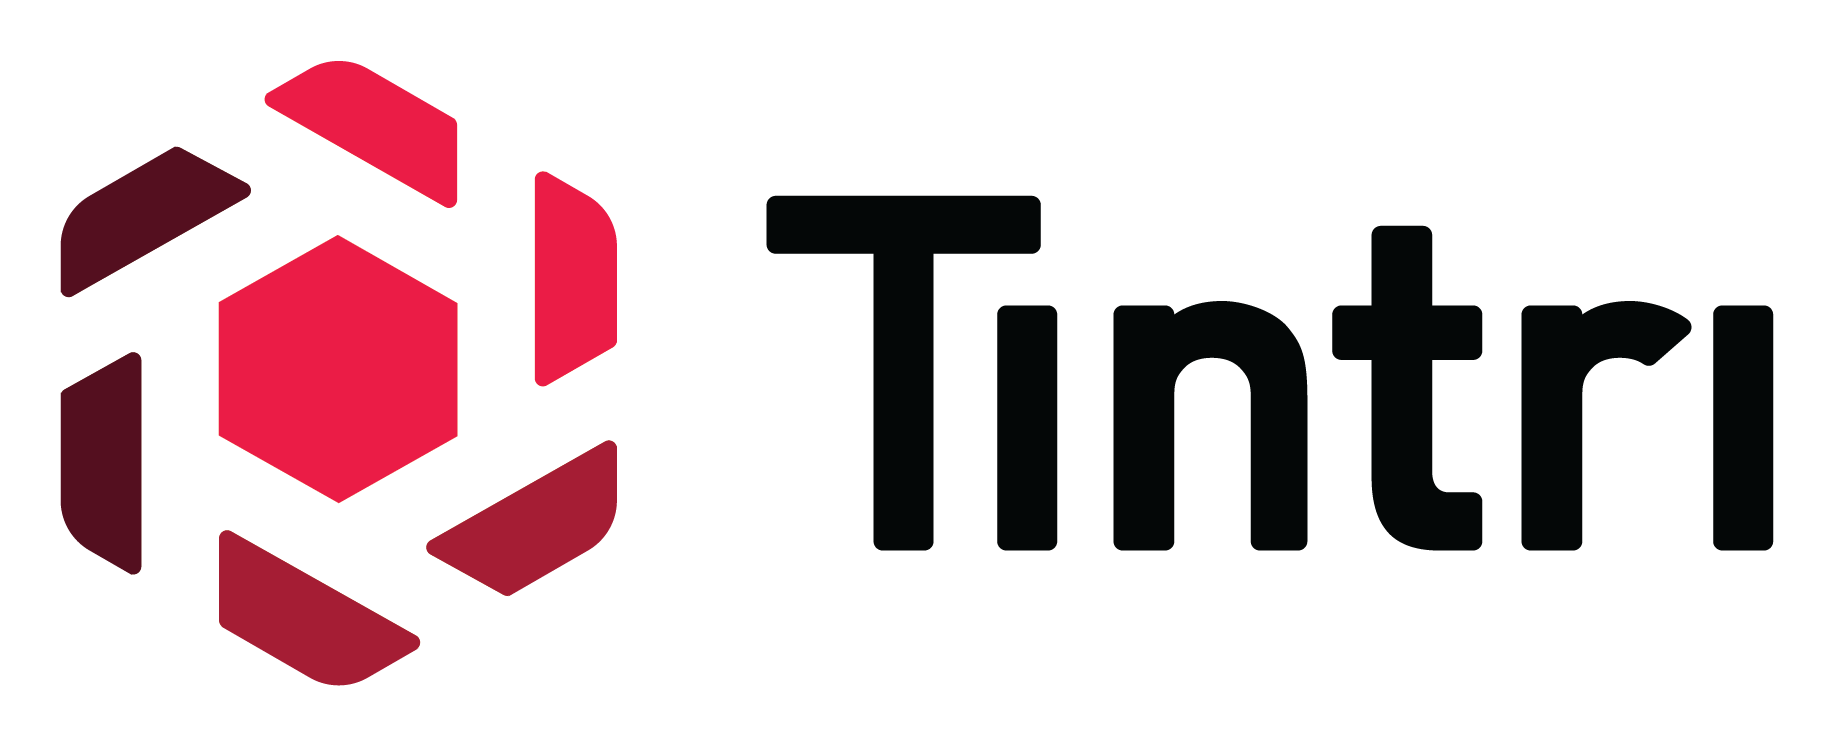 tintri-logo-new